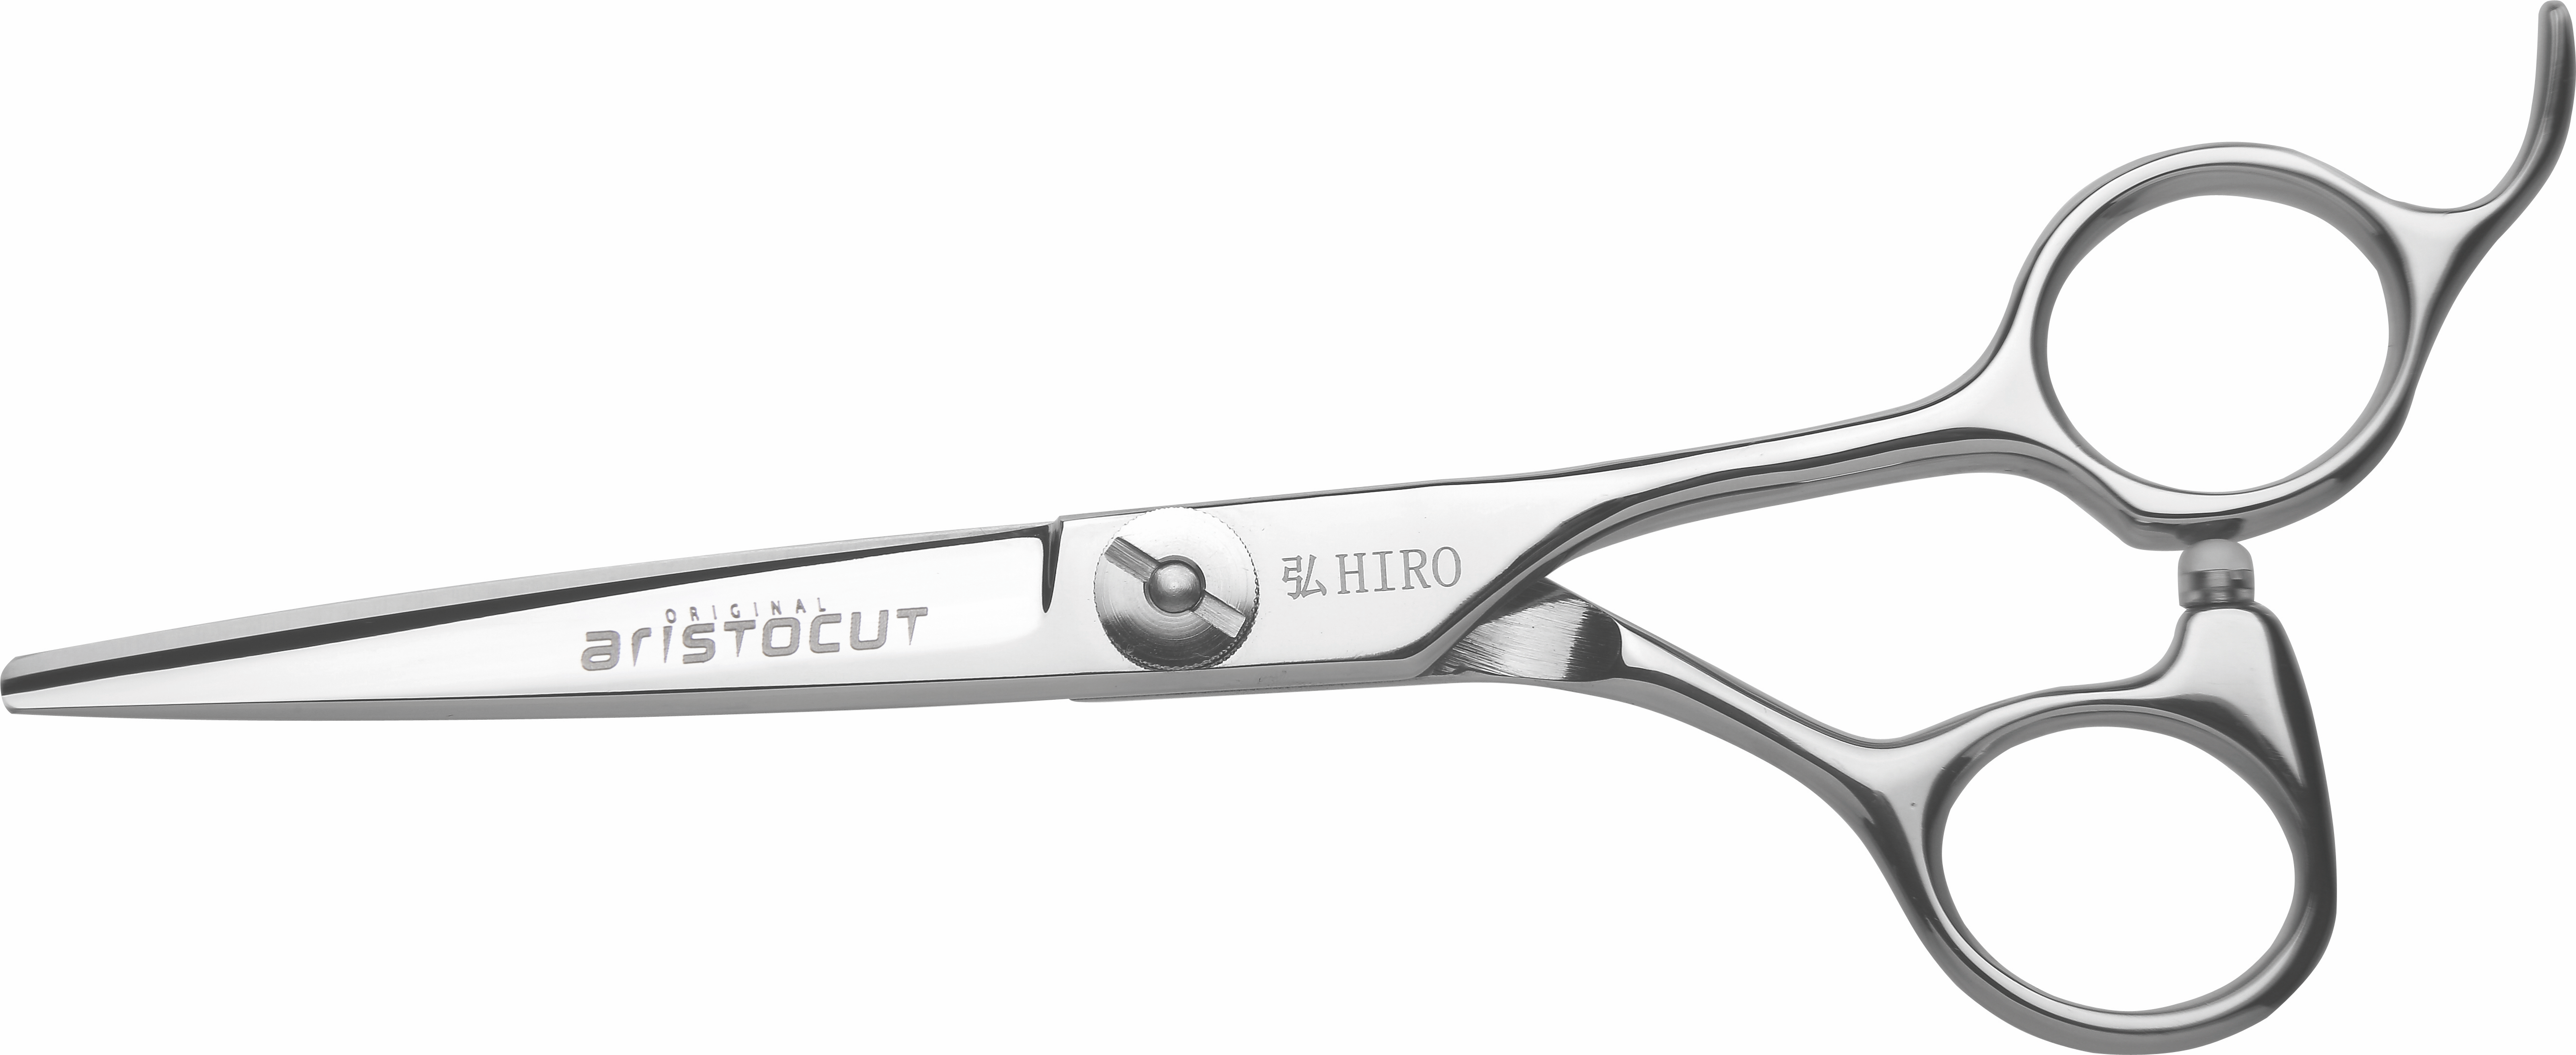 HIRO Hair cutting scissors